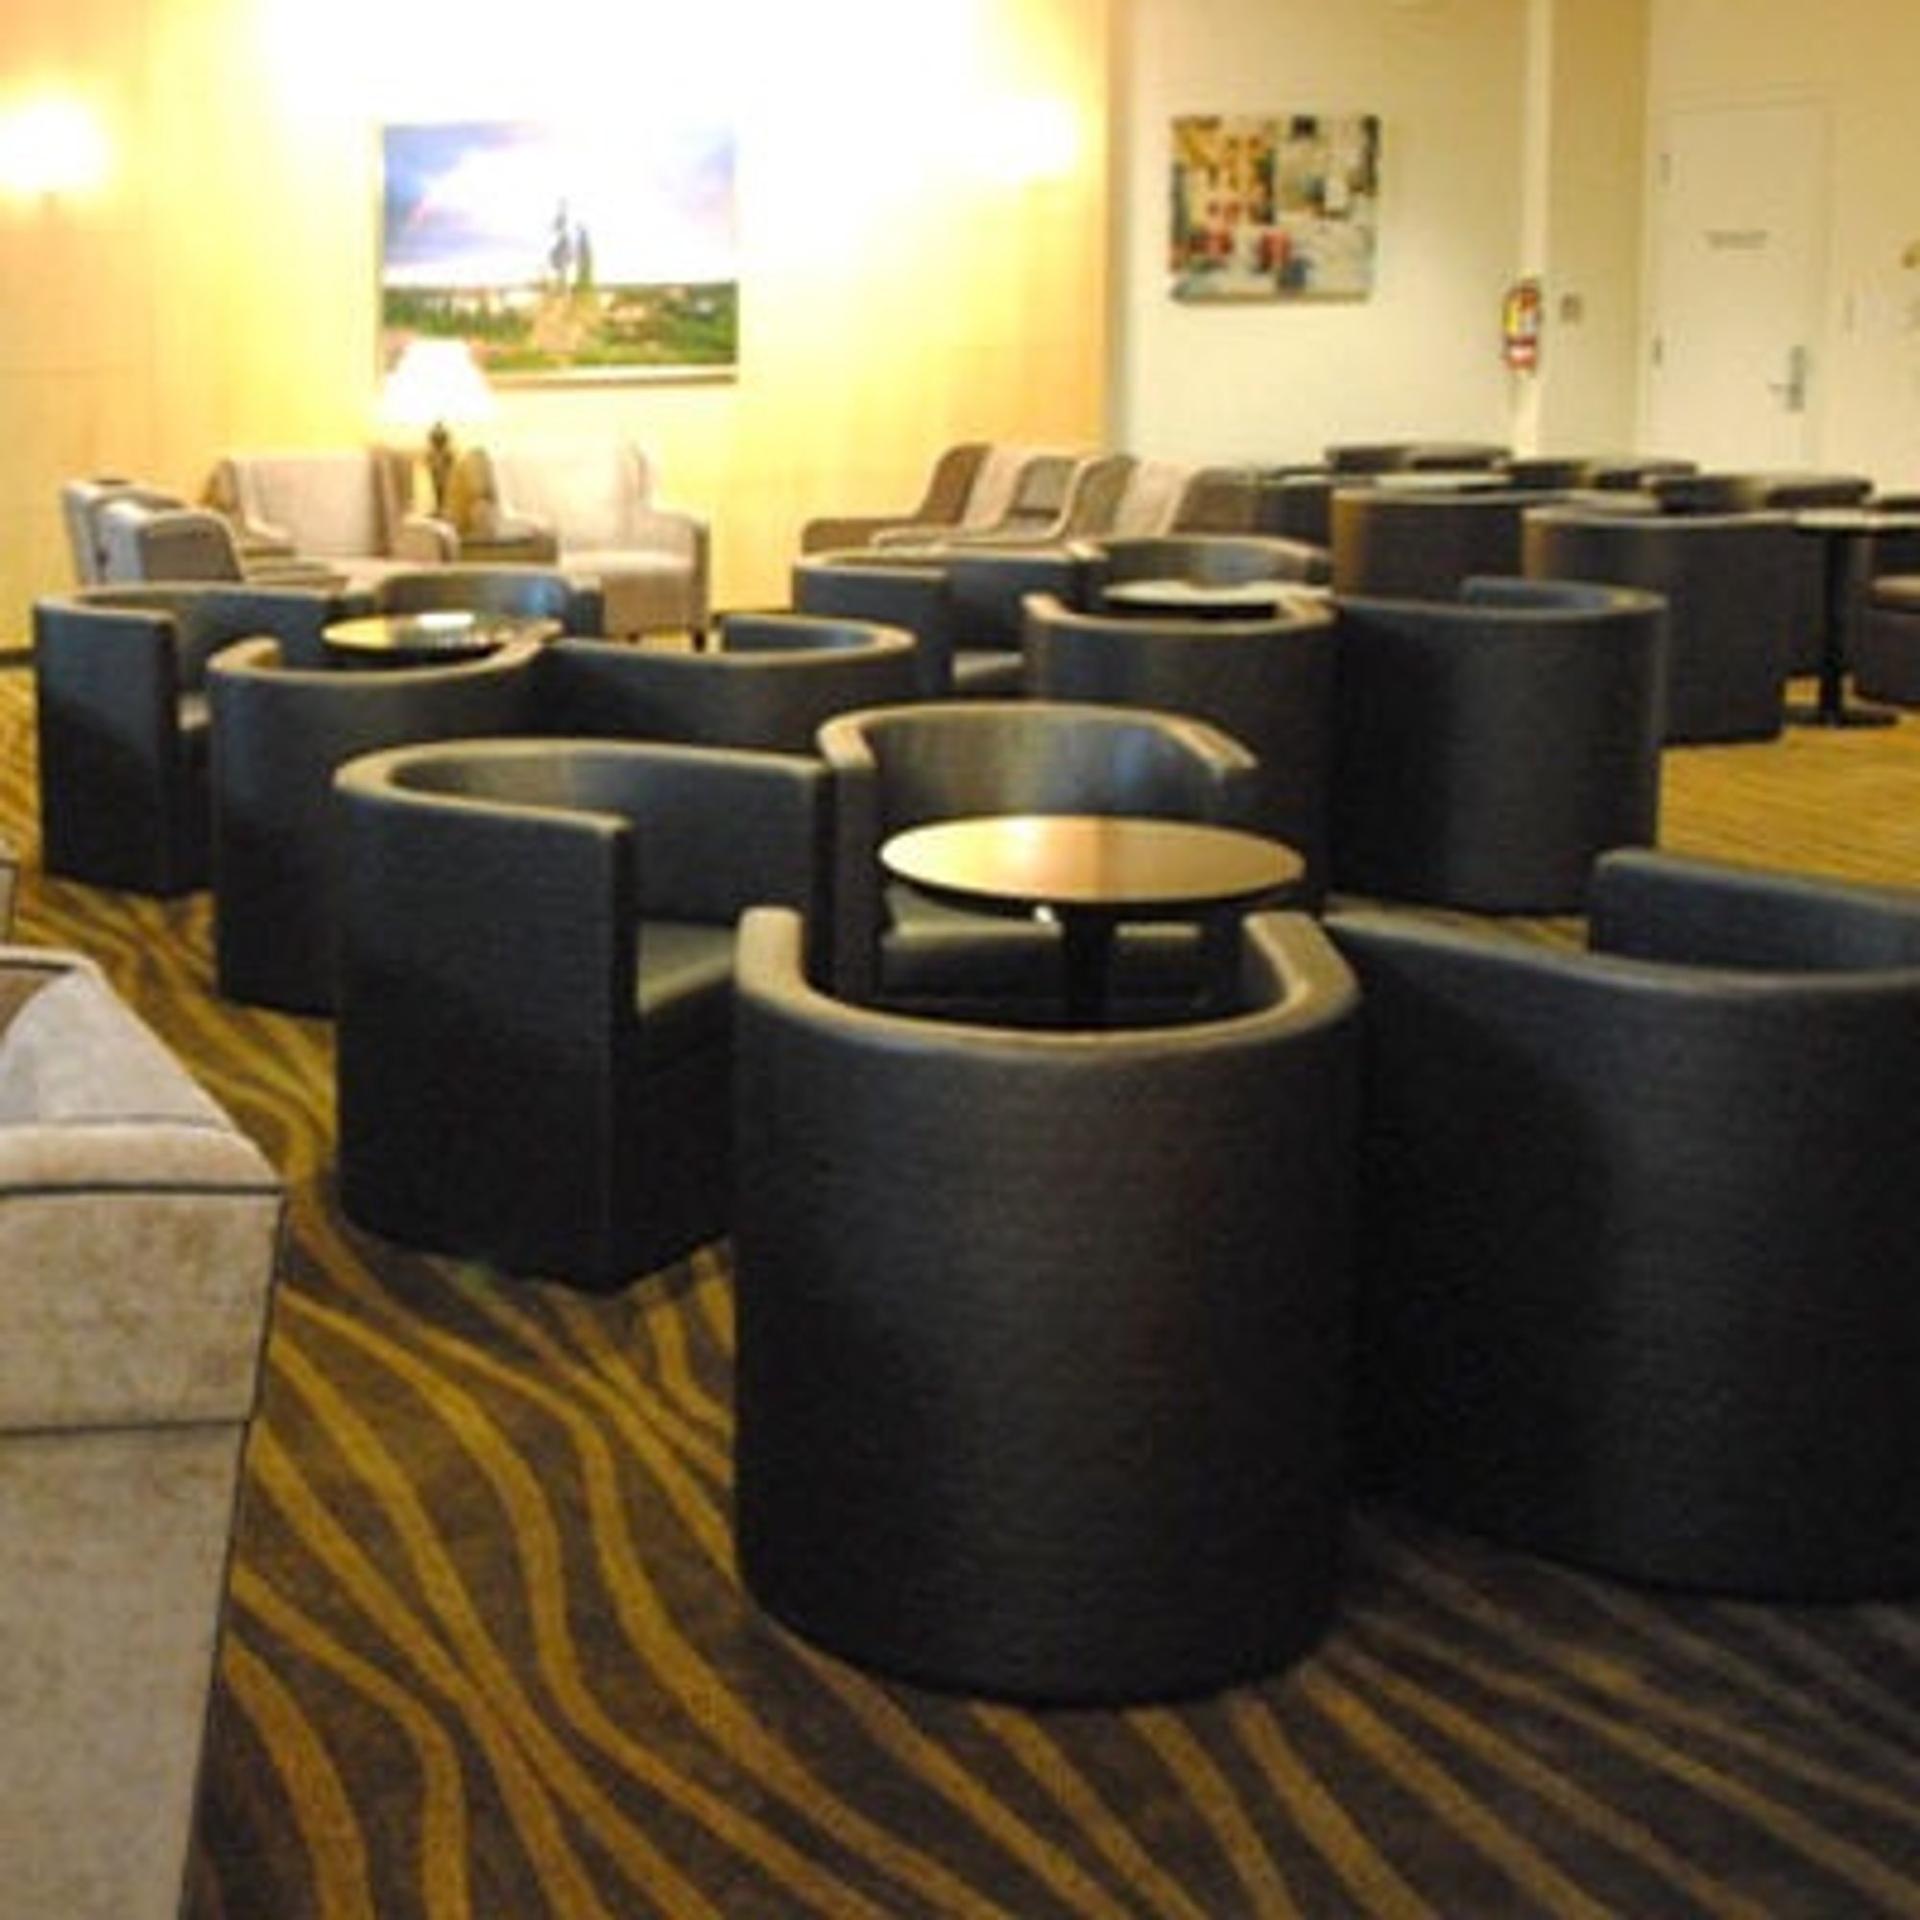 Plaza Premium Lounge image 10 of 57